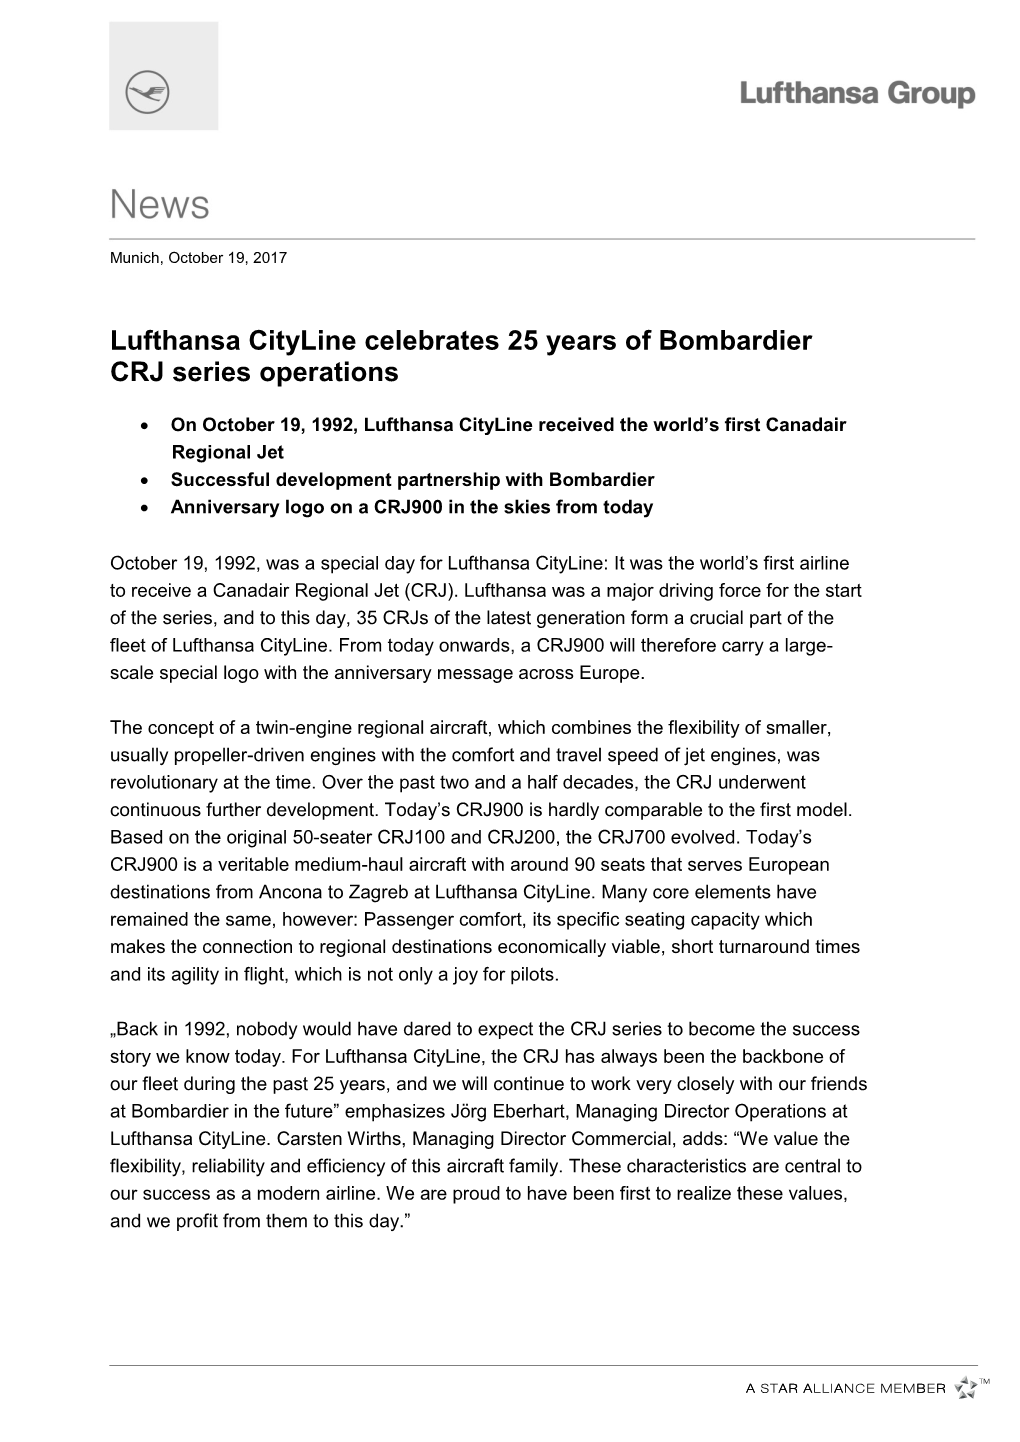 Lufthansa Cityline Celebrates 25 Years of Bombardier CRJ Series Operations